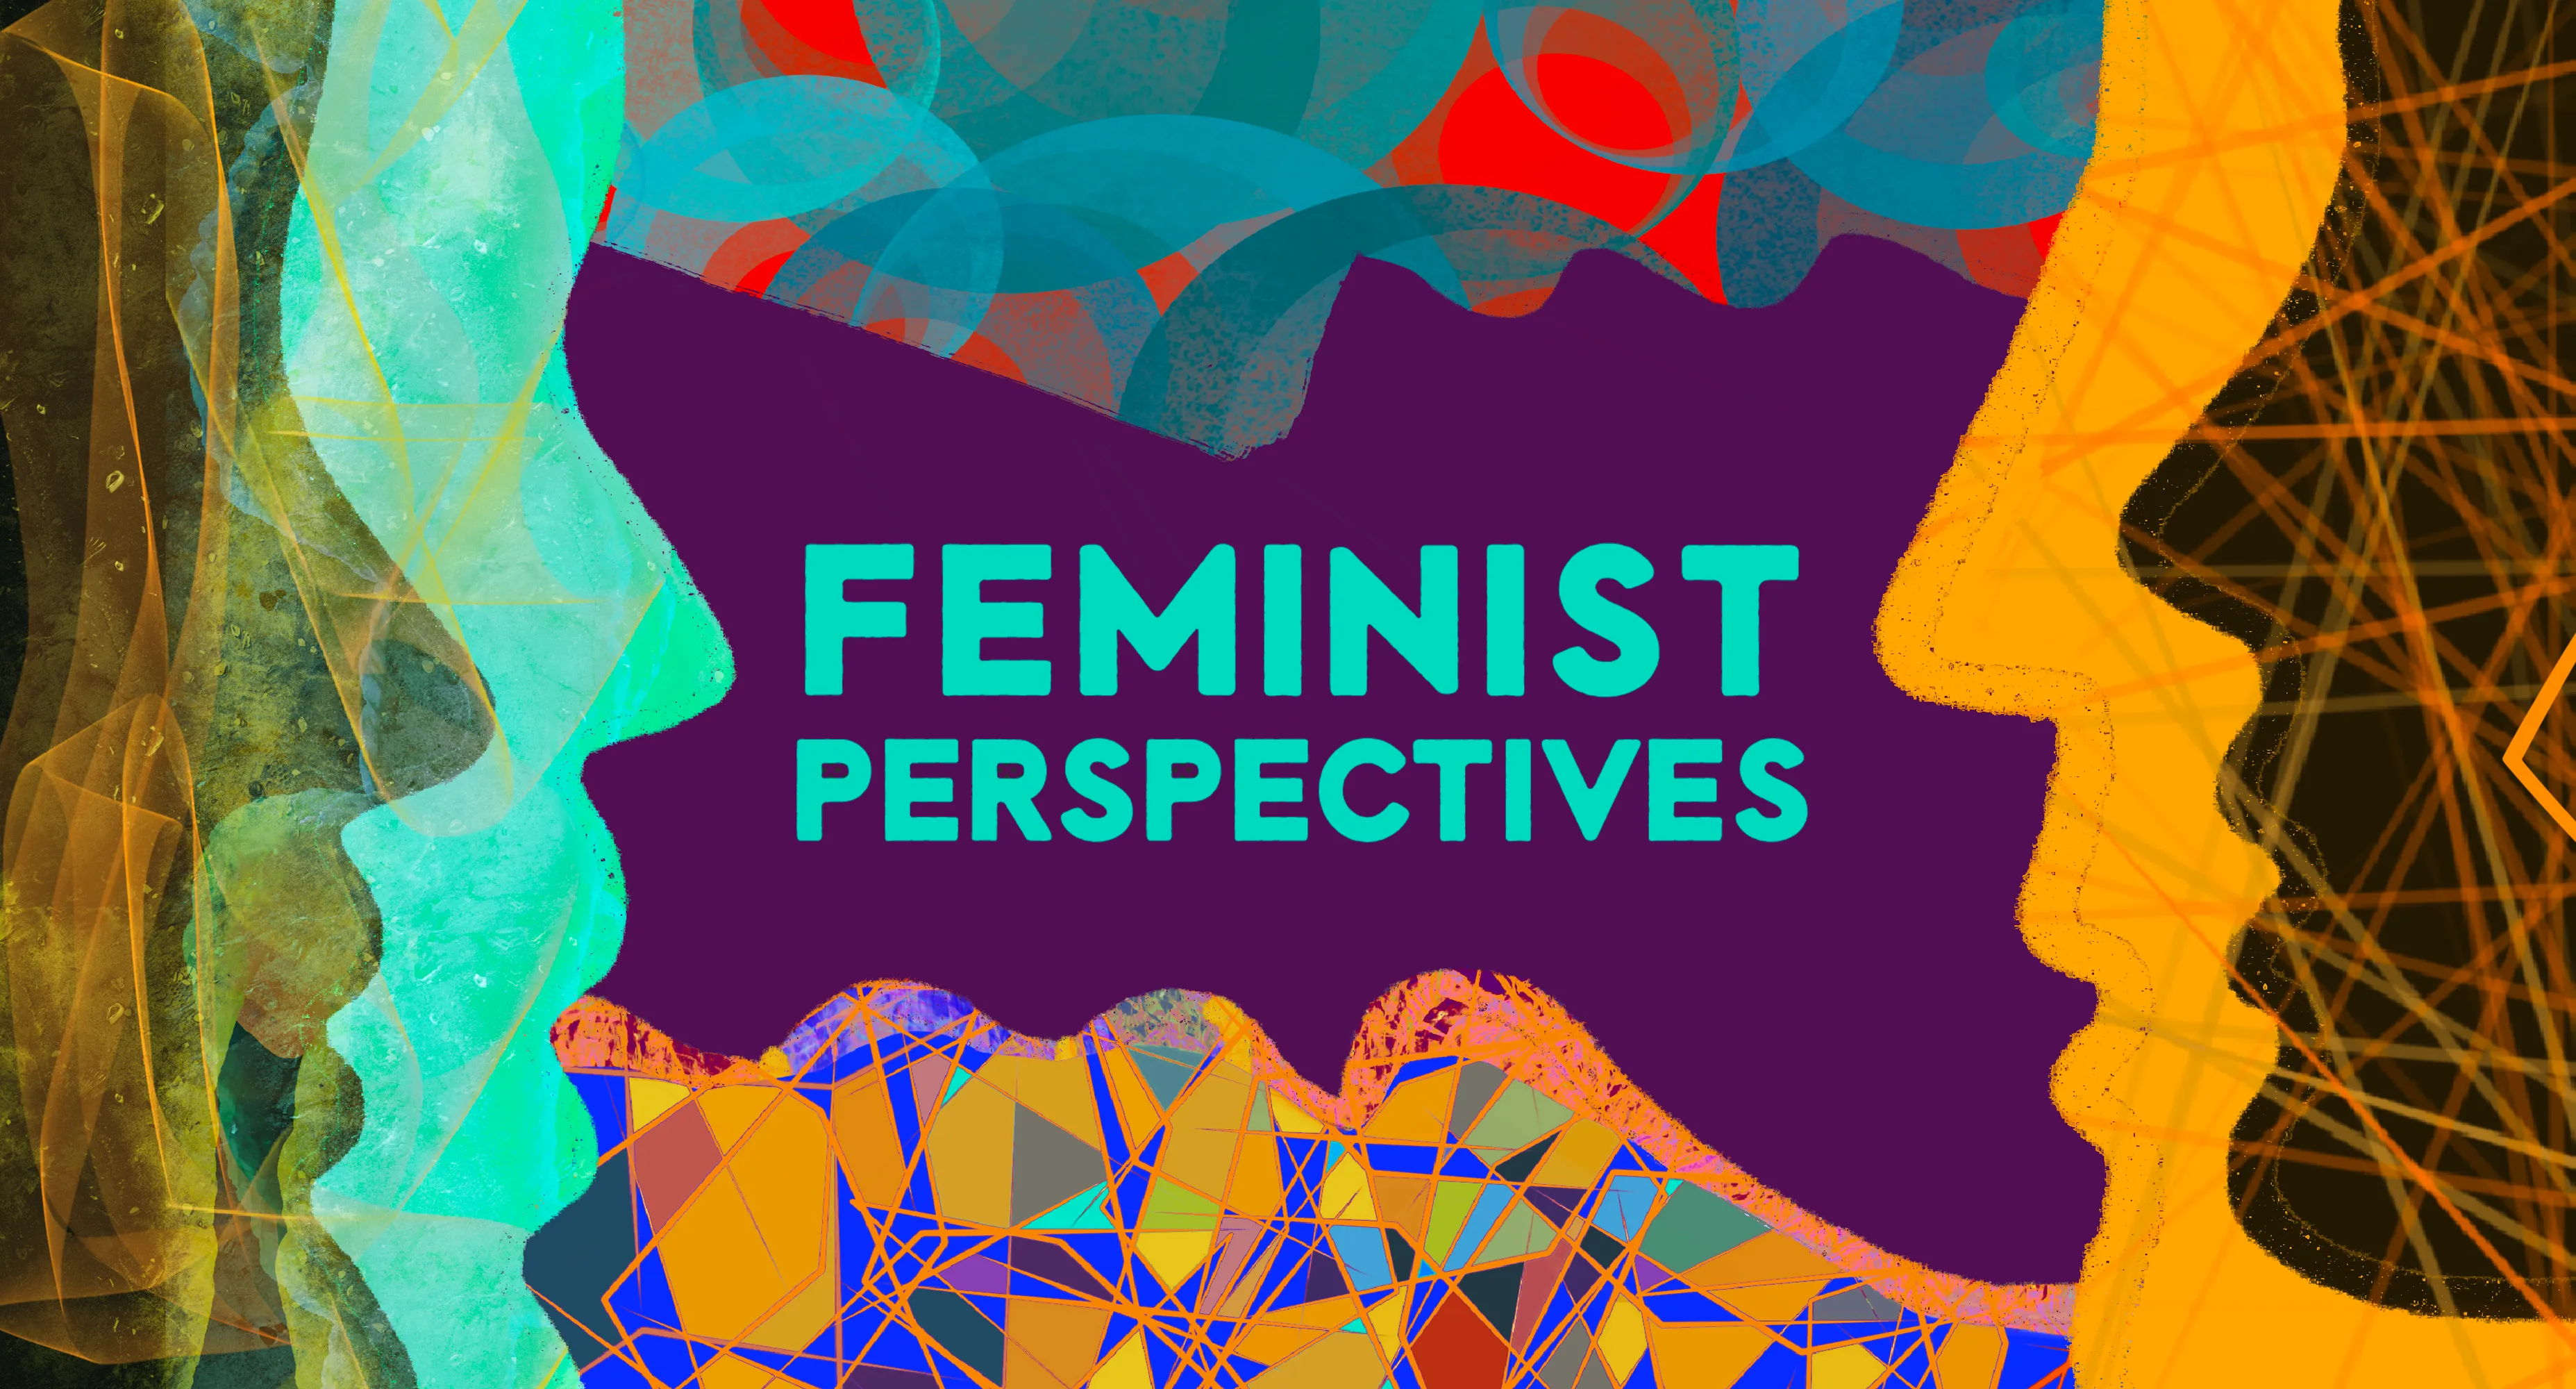 Feminist-perspectivesbanner